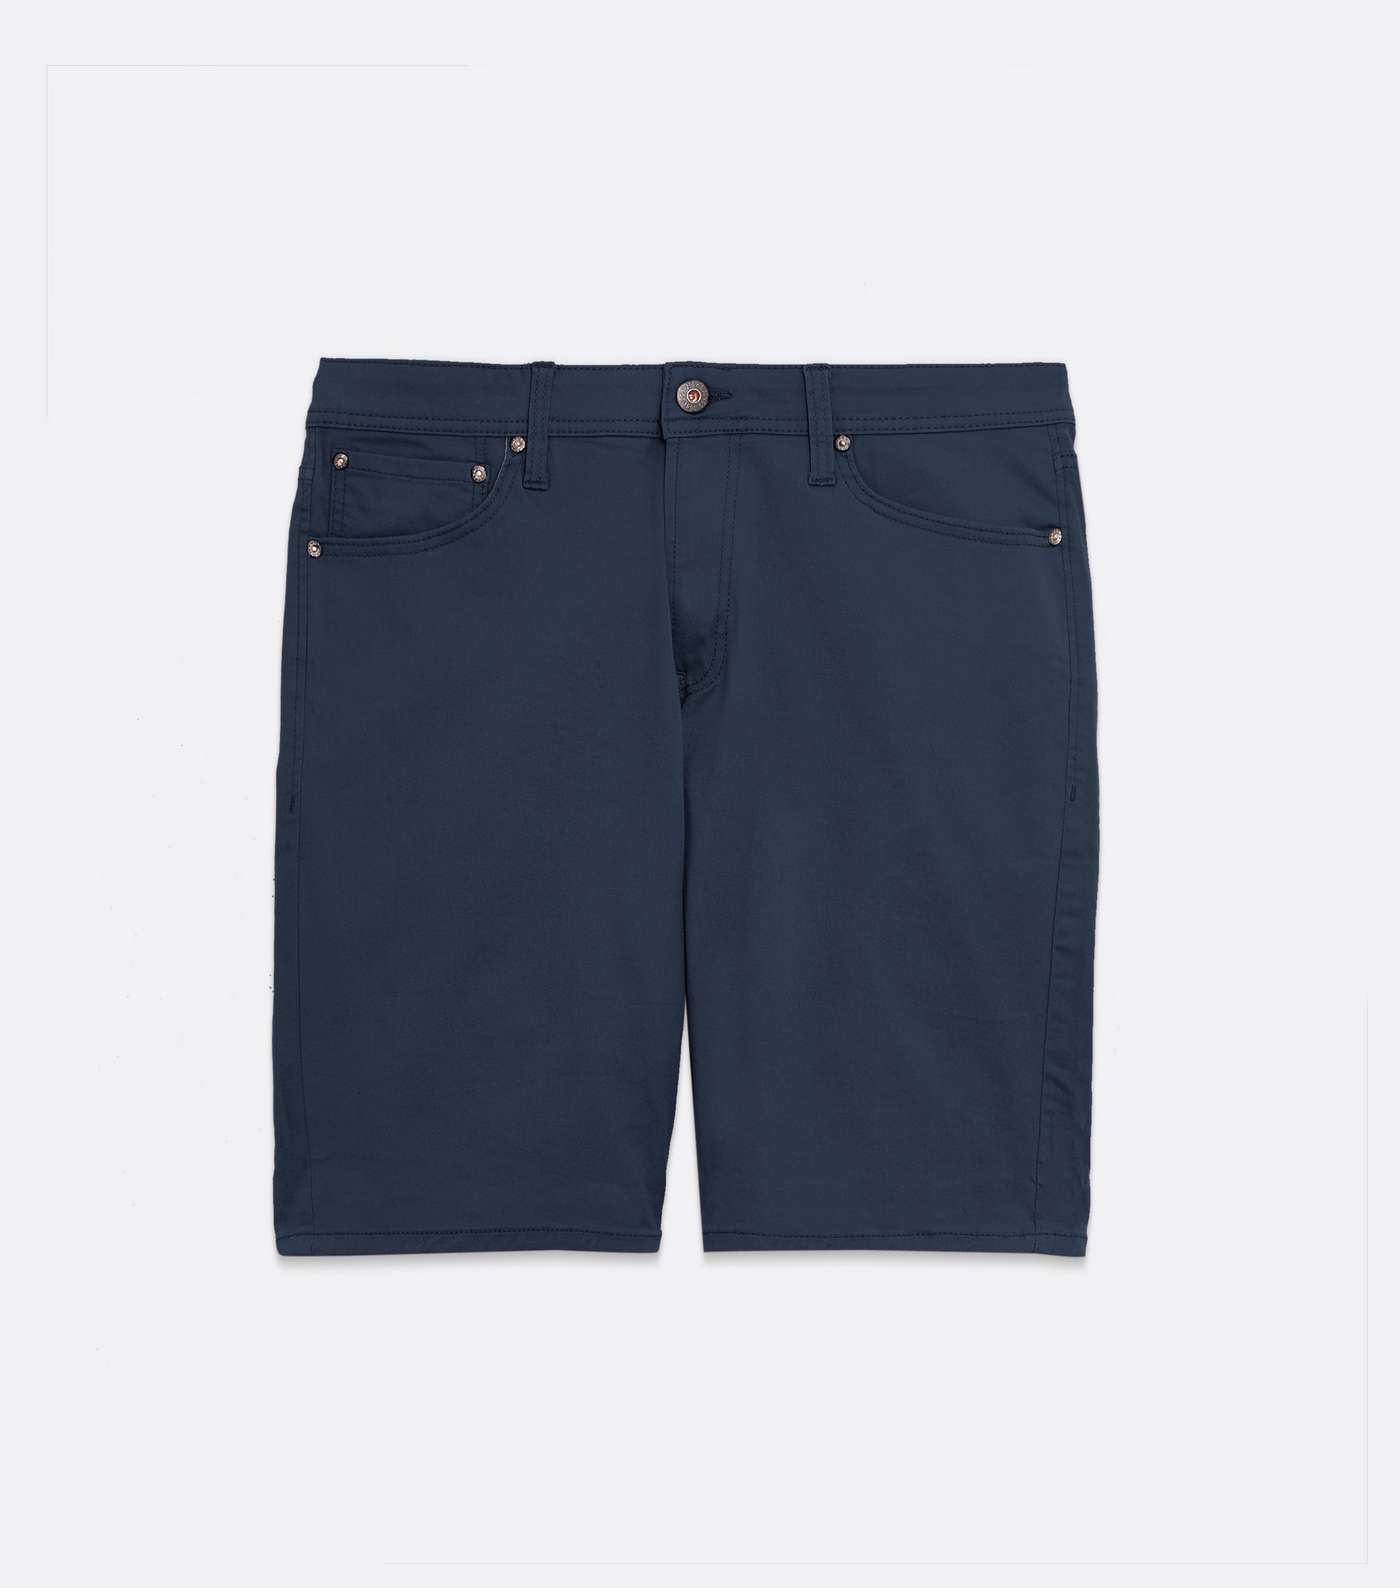 Jack & Jones Navy Denim Slim Fit Shorts Image 5